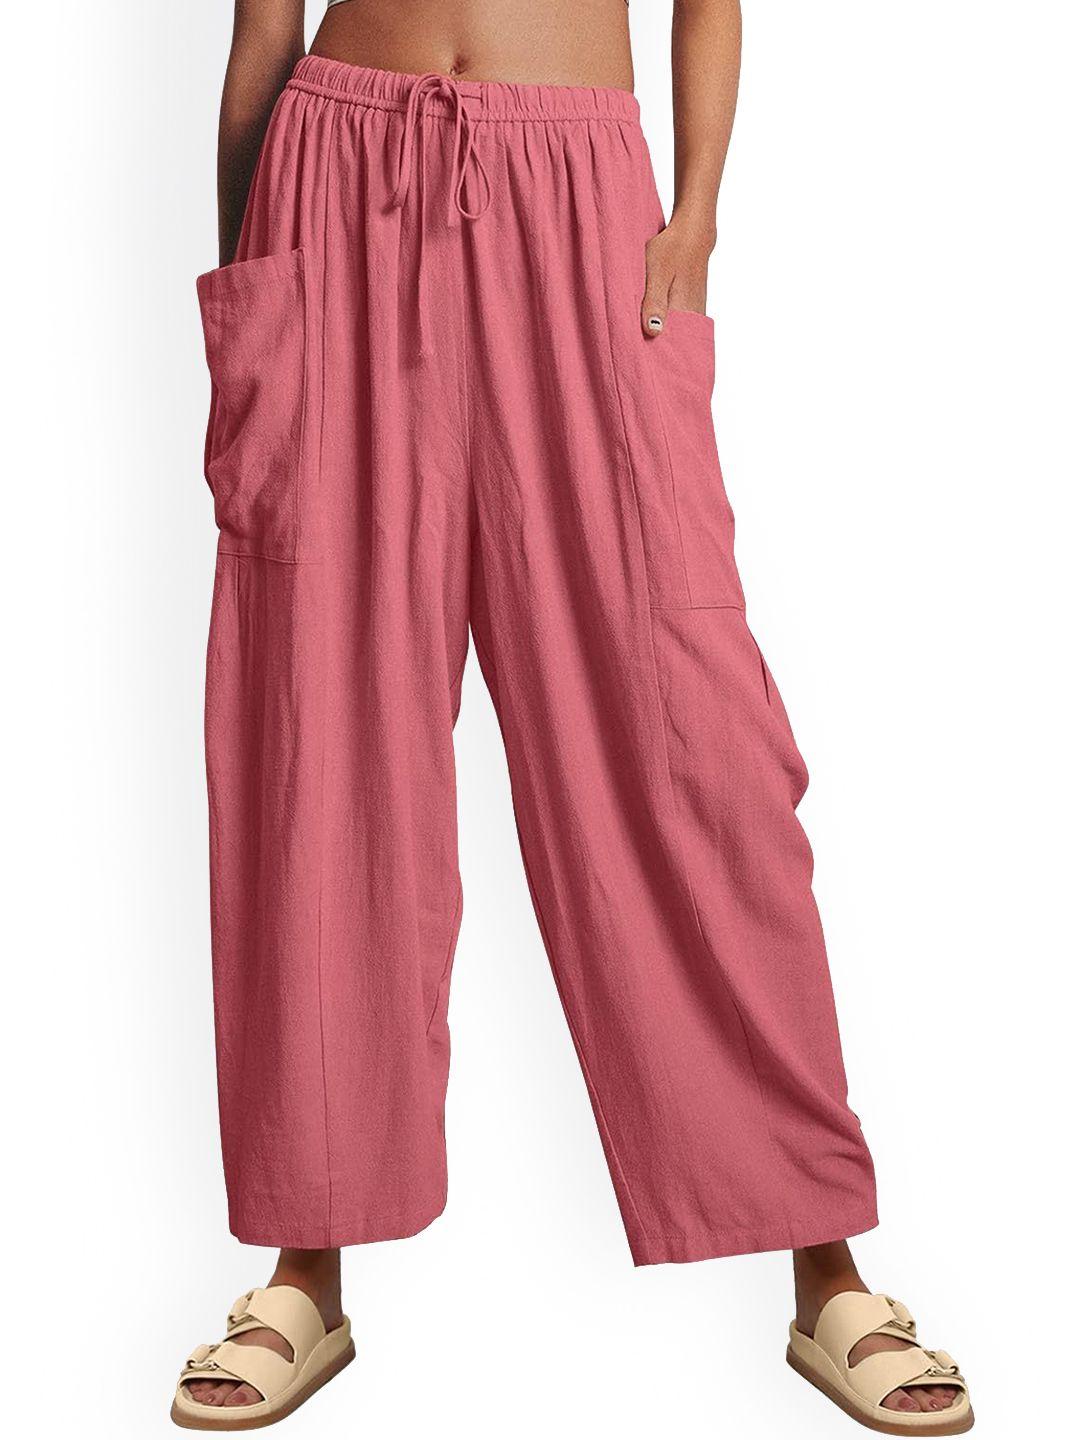 stylecast x kpop women pink original trousers